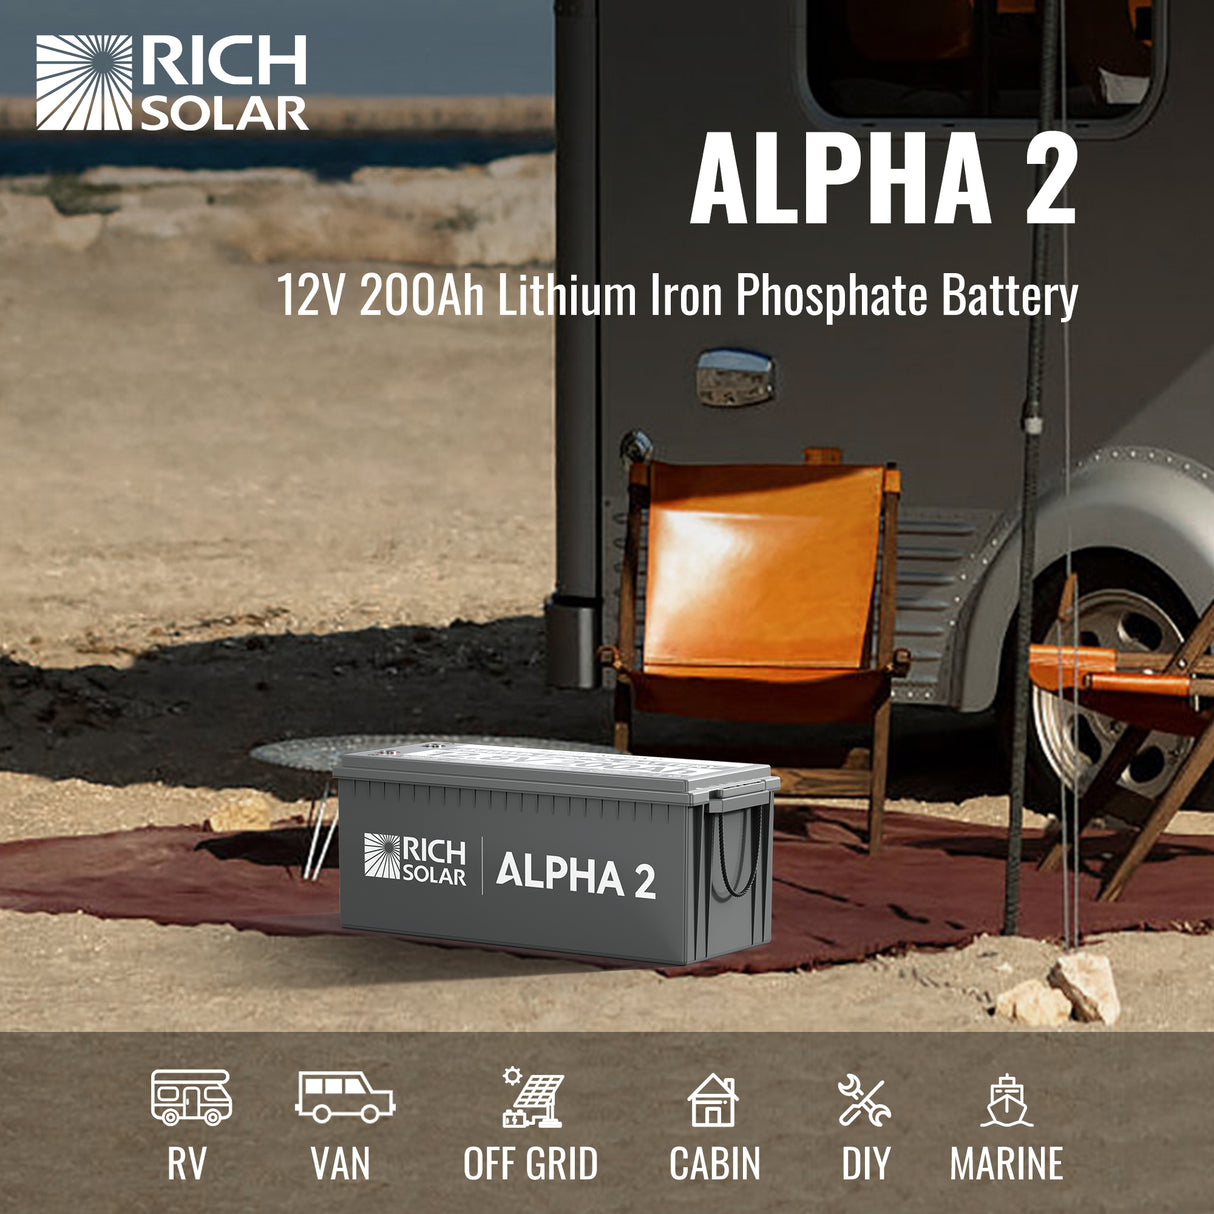 12V 200Ah Lithium Iron Phosphate Battery - RICH SOLAR